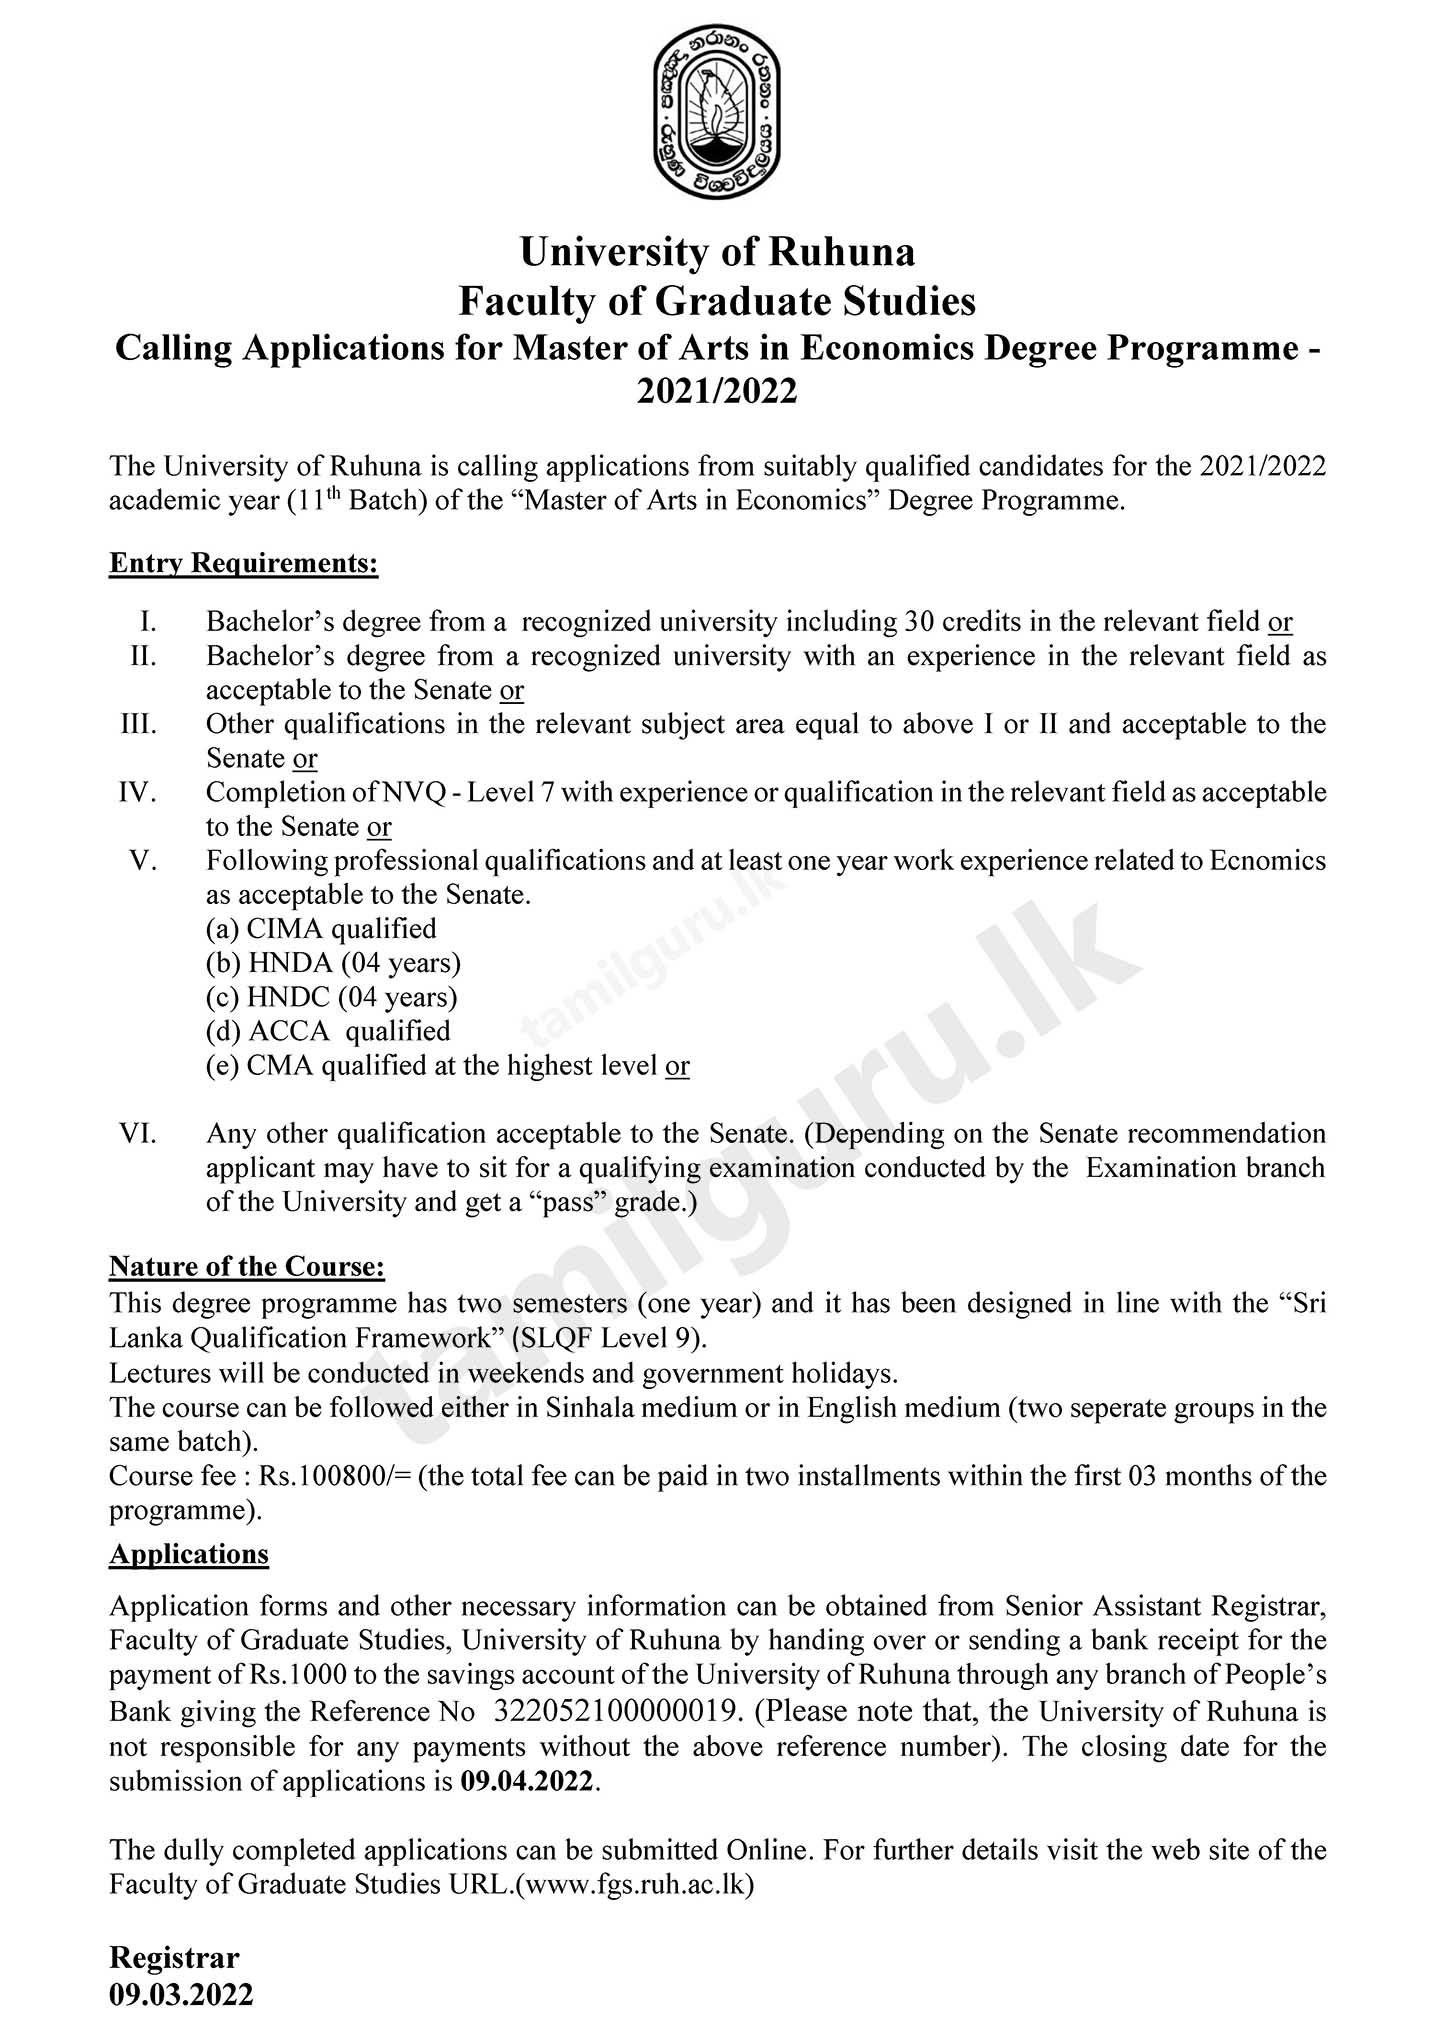 Master of Arts (M.A) in Economics Degree Programme (2021/2022) - University of Ruhuna